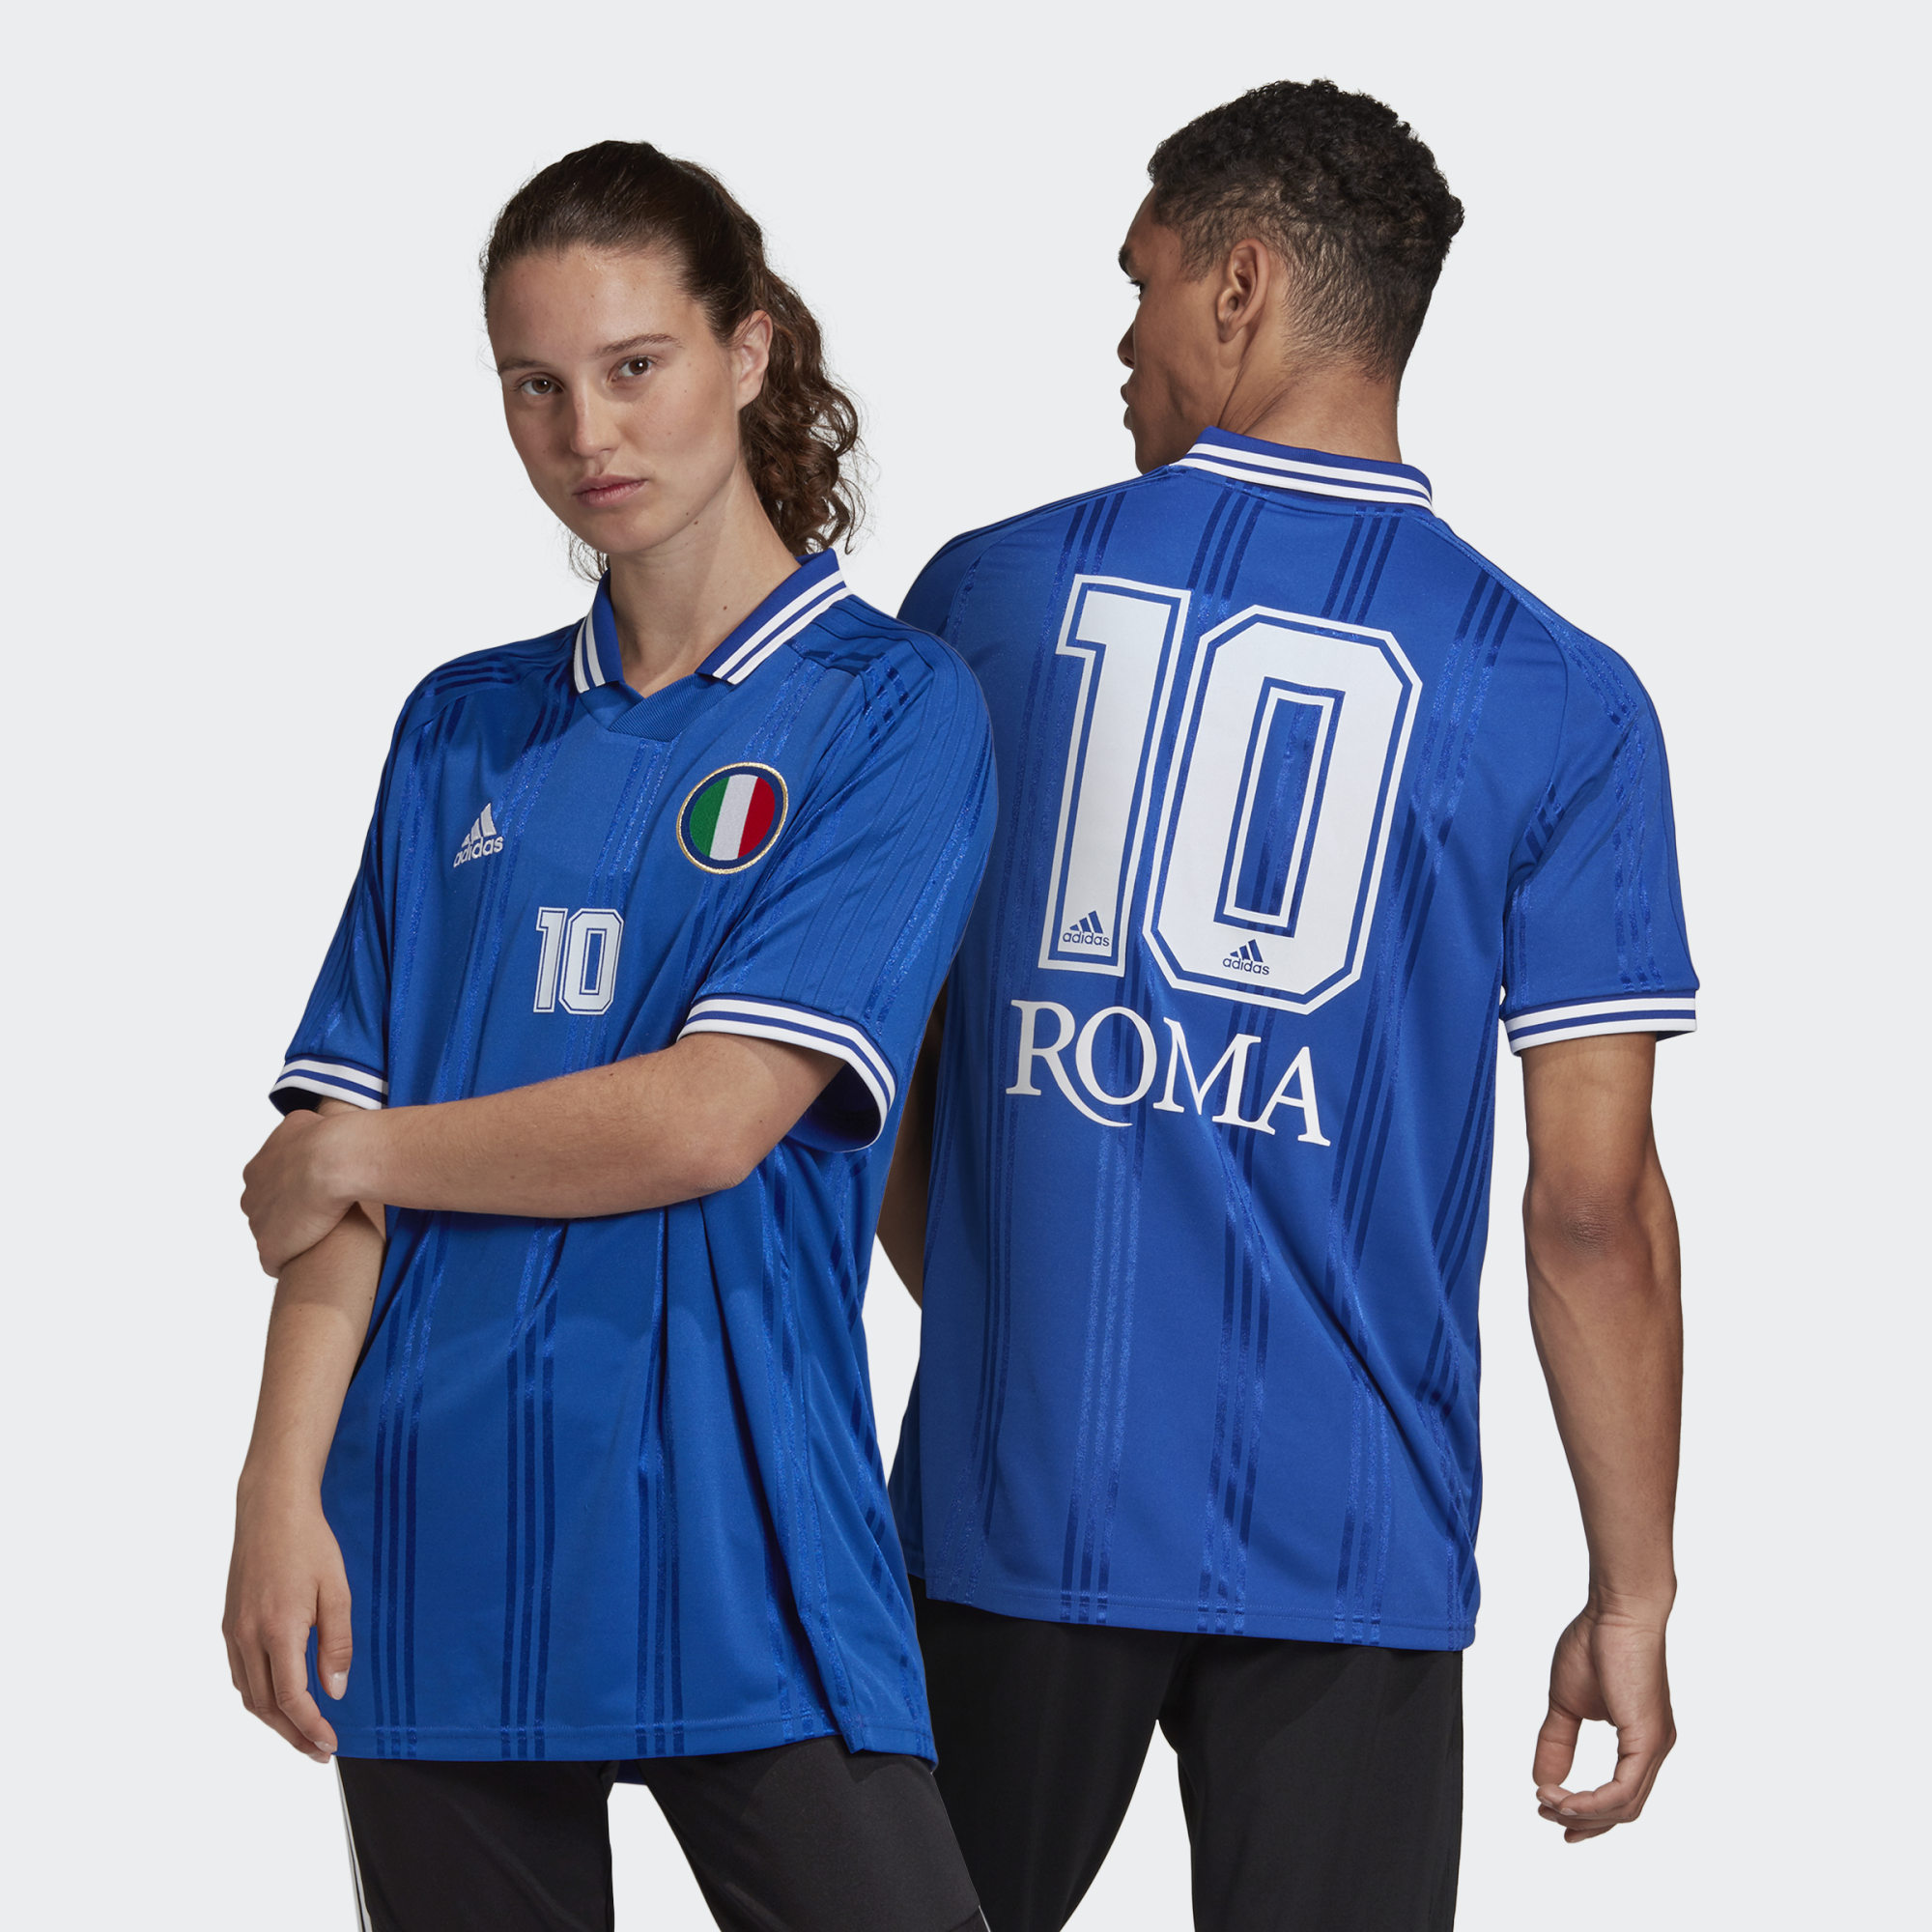 Adidas City Pack Rome Jersey - Football Shirt Culture - Latest Football ...